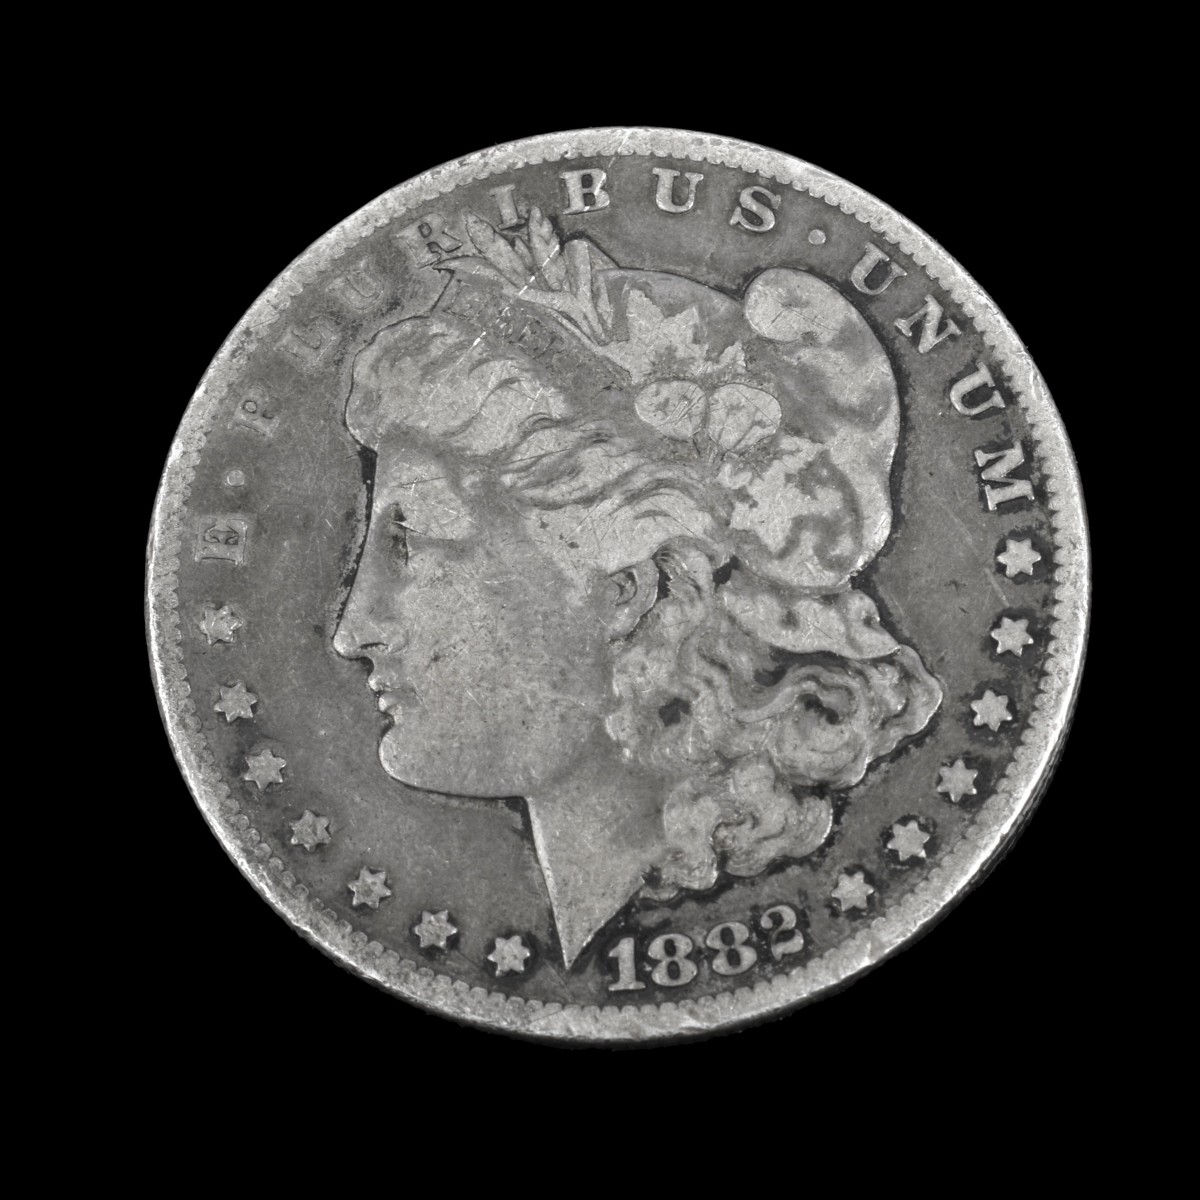 Ten U.S. Morgan Silver Dollars